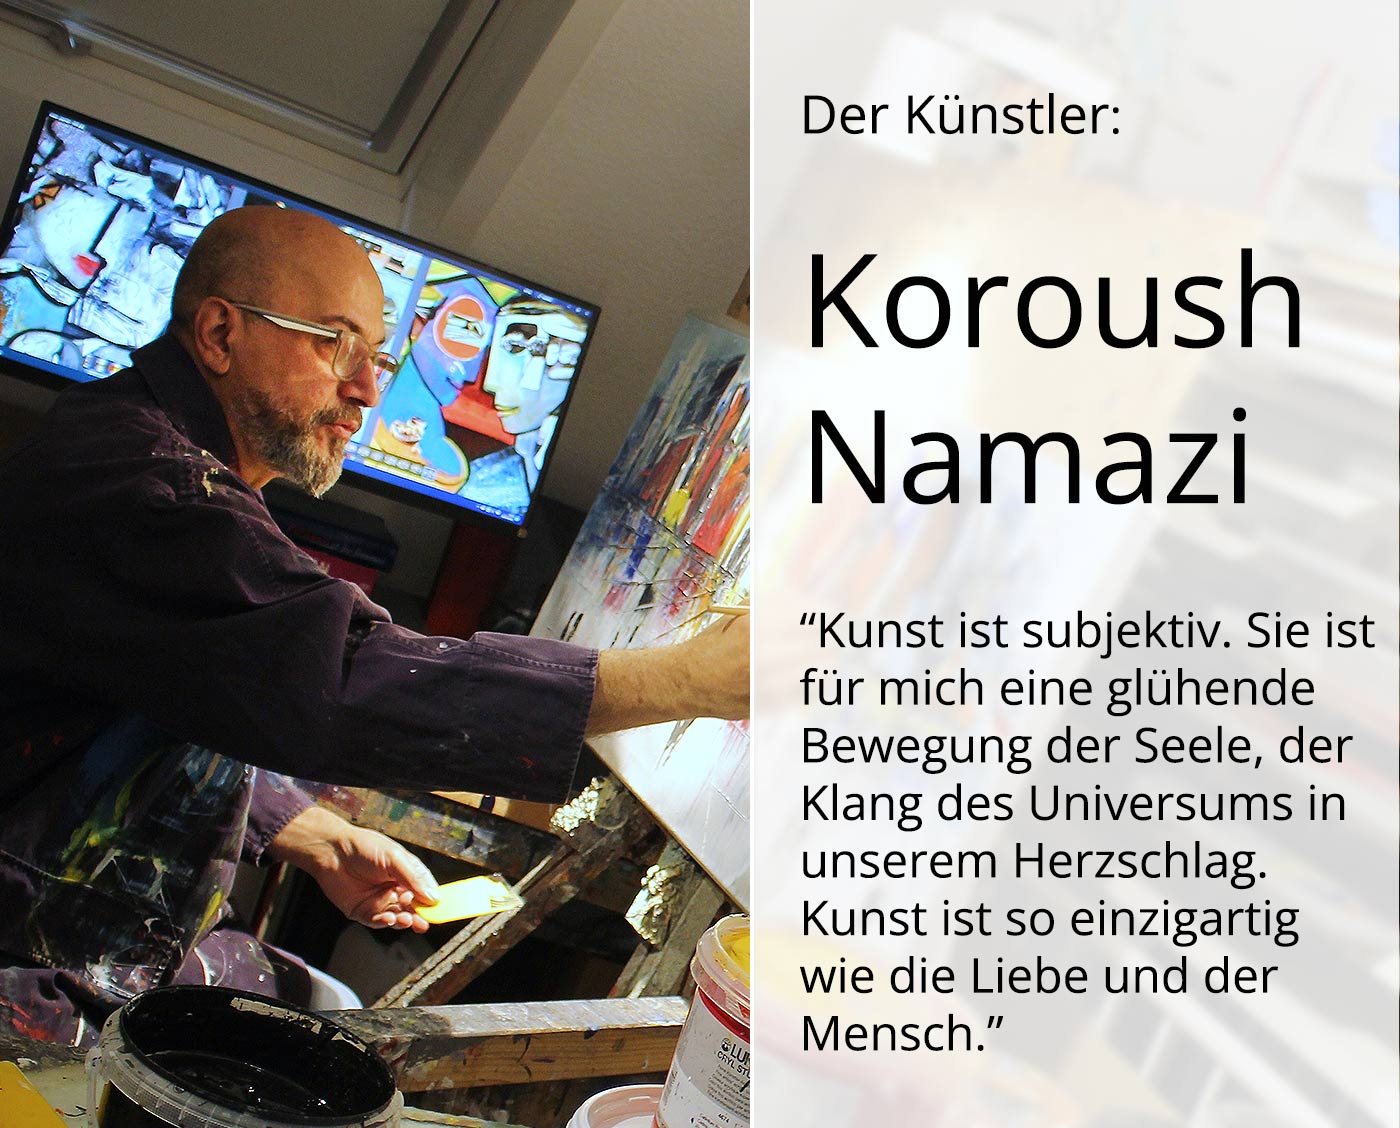 Kunstdruck, signiert: "Naturstadt VI", K. Namazi, Edition, Nr. 1/25